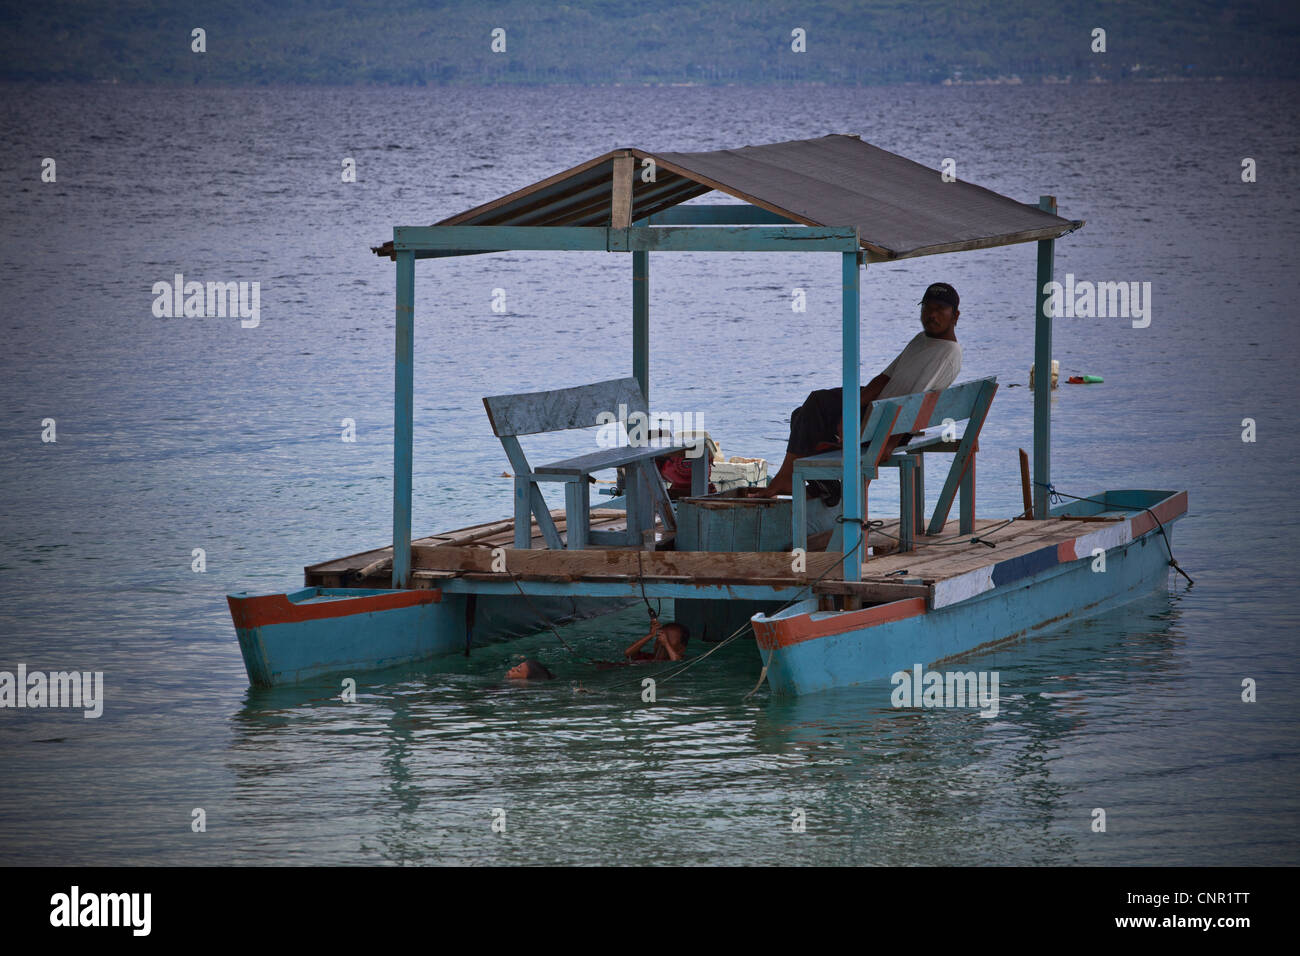 https://c8.alamy.com/comp/CNR1TT/fishing-boat-on-a-beach-near-palu-sulawesi-indonesia-south-asia-south-CNR1TT.jpg